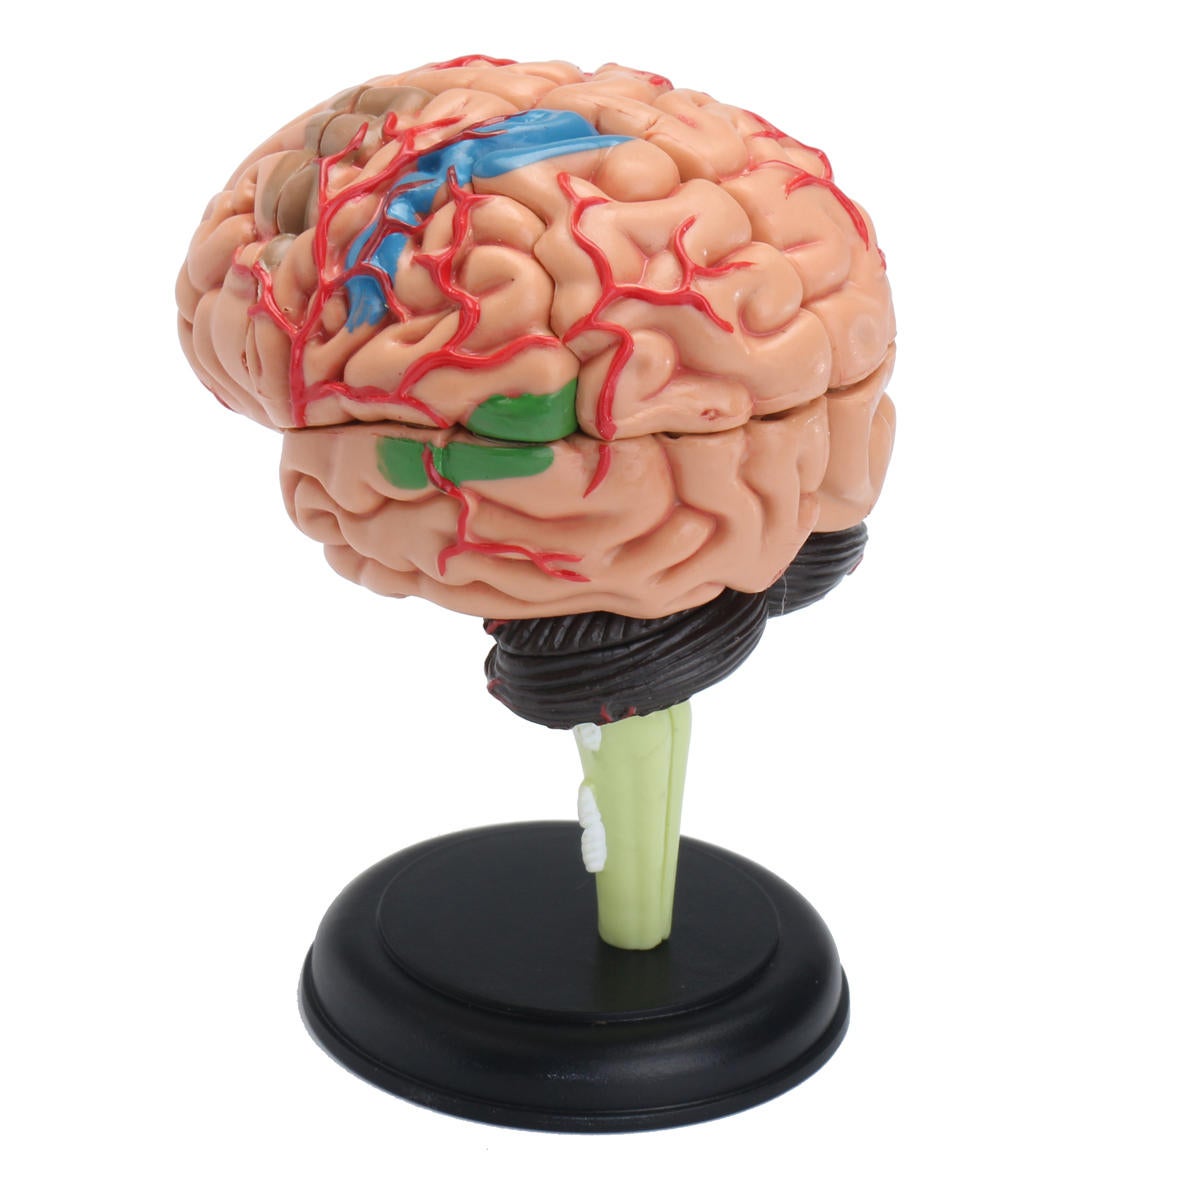 4D Disassembled Anatomical Human Brain Model Anatomy Scientific Medical Teaching Tool